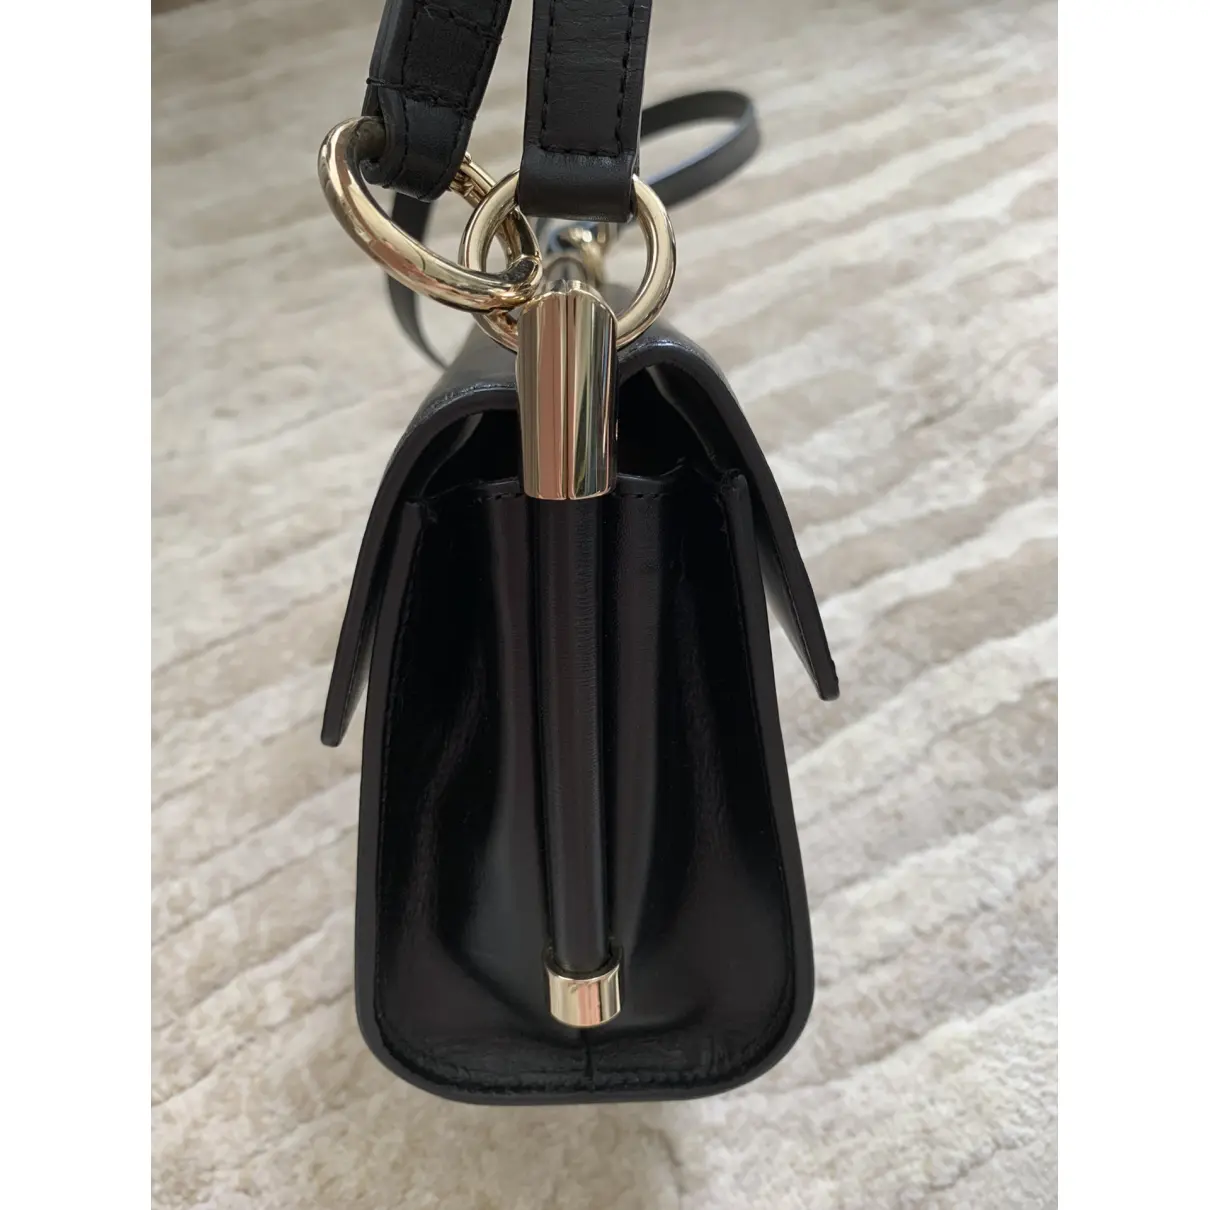 Mini sac viv sellier leather handbag Roger Vivier